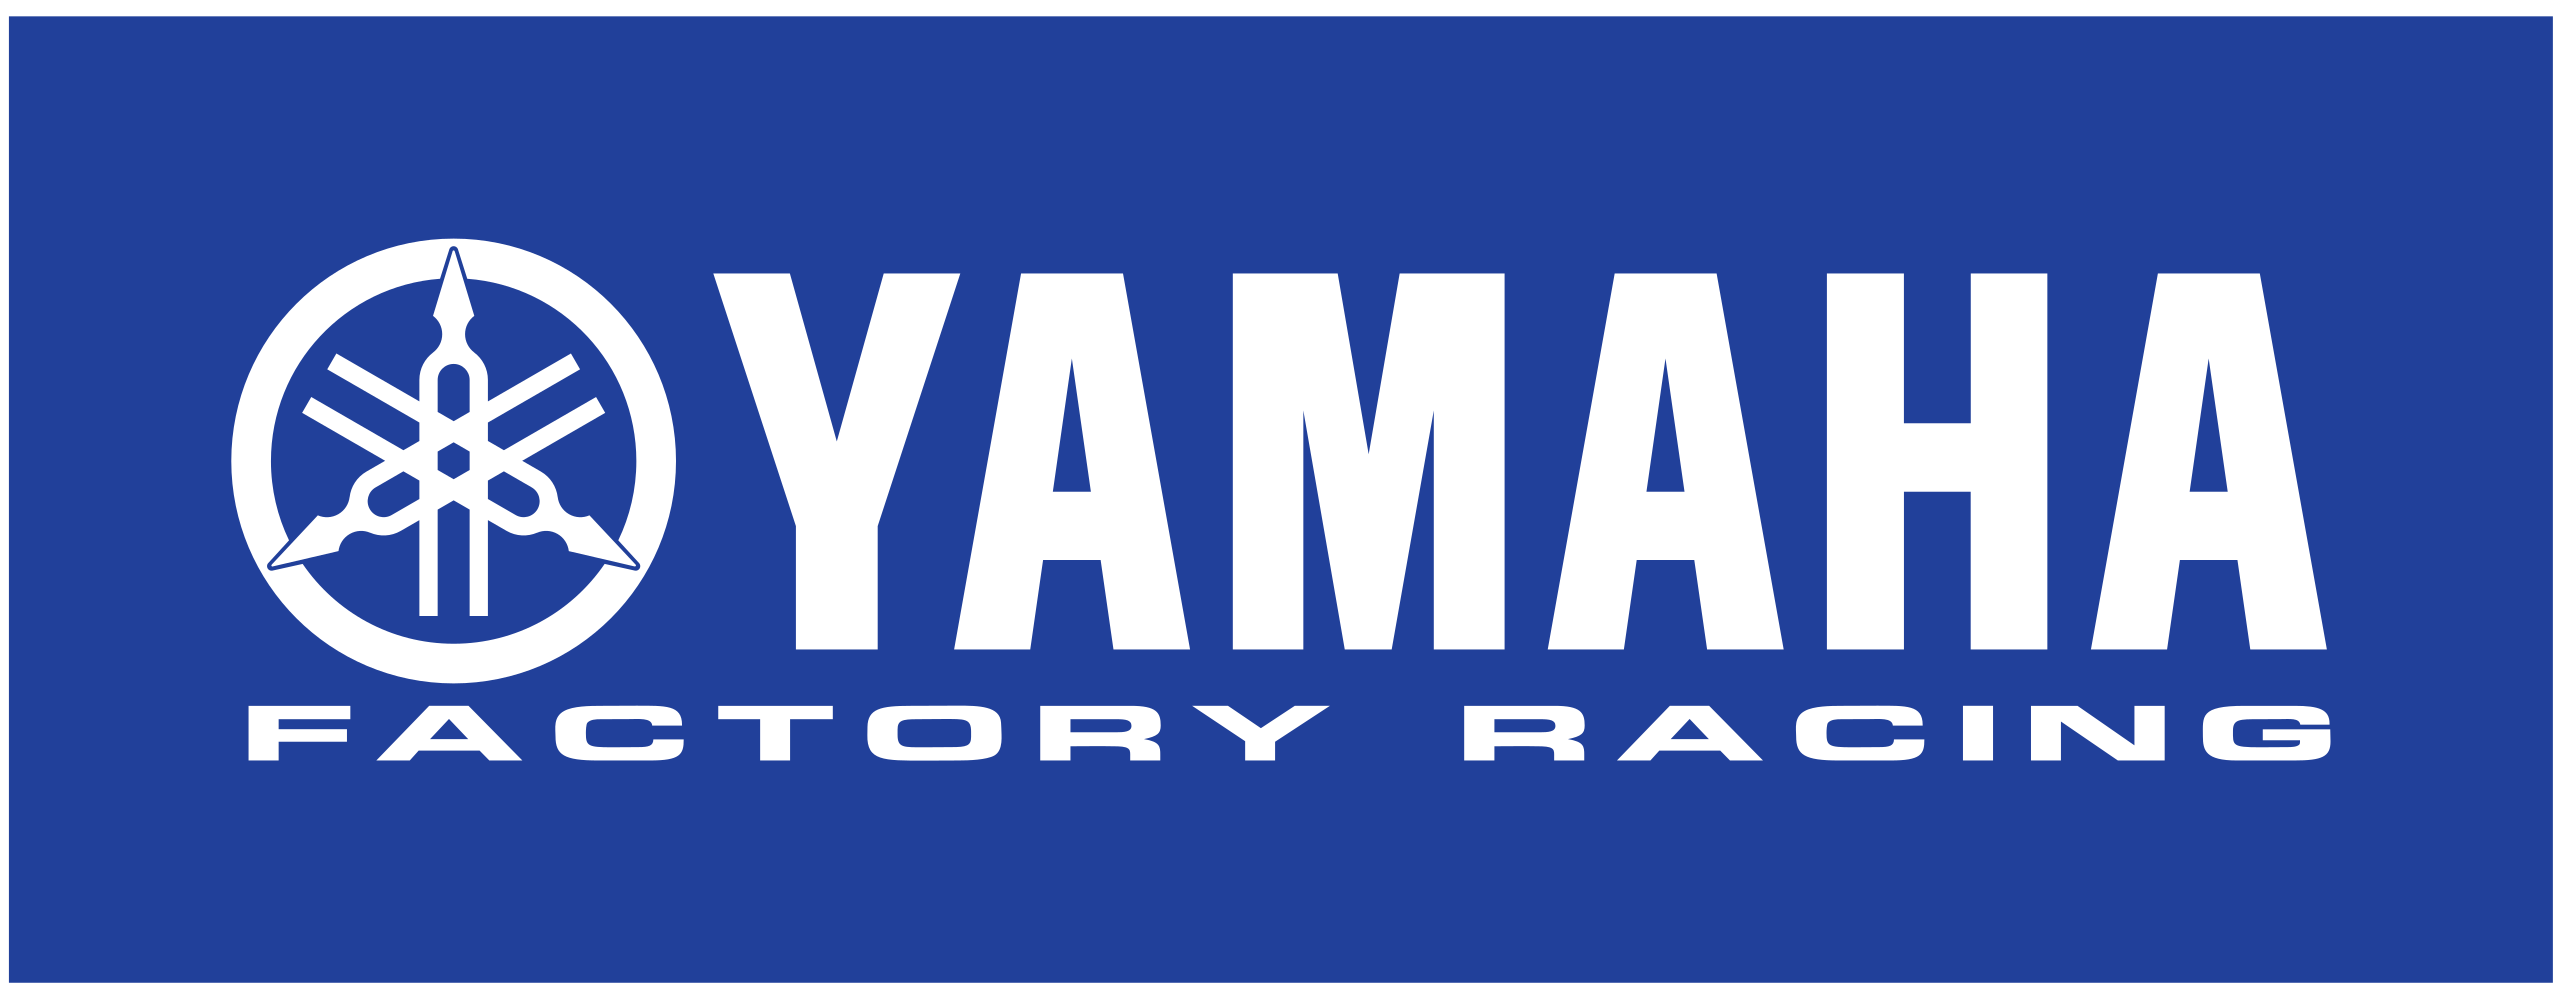 Yamaha Logo Wallpaper (61+ images)